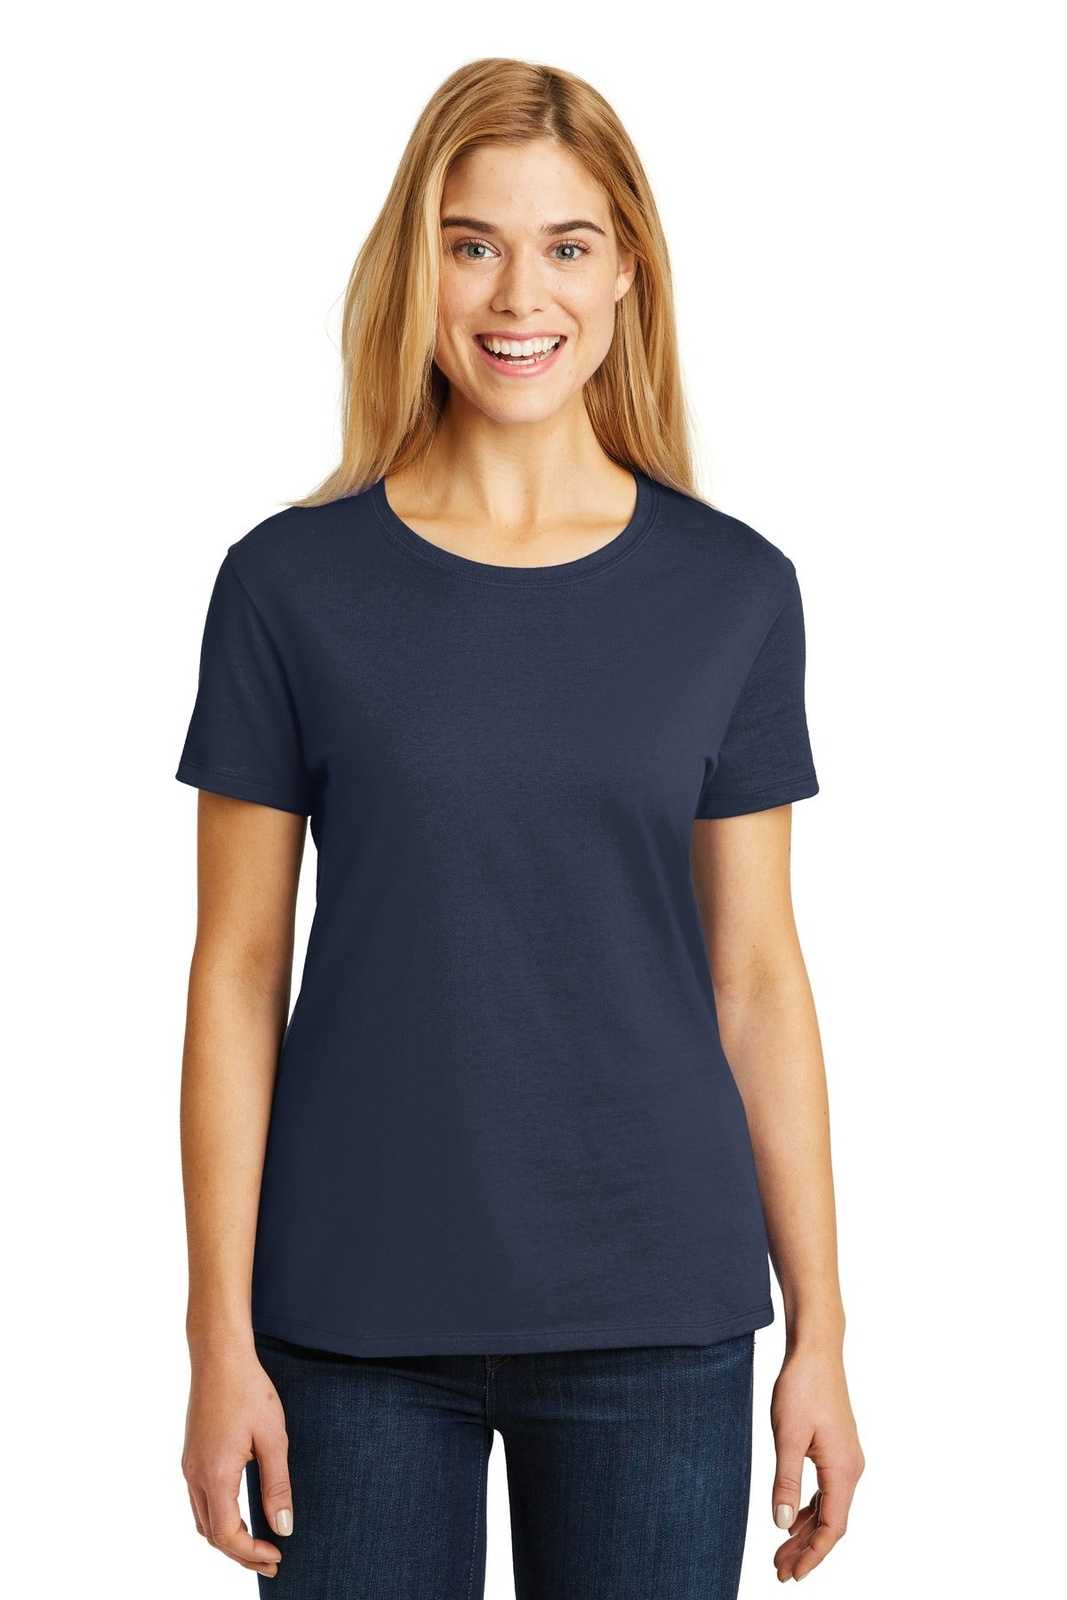 Hanes SL04 Ladies Nano-T Cotton T-Shirt - Navy - HIT a Double